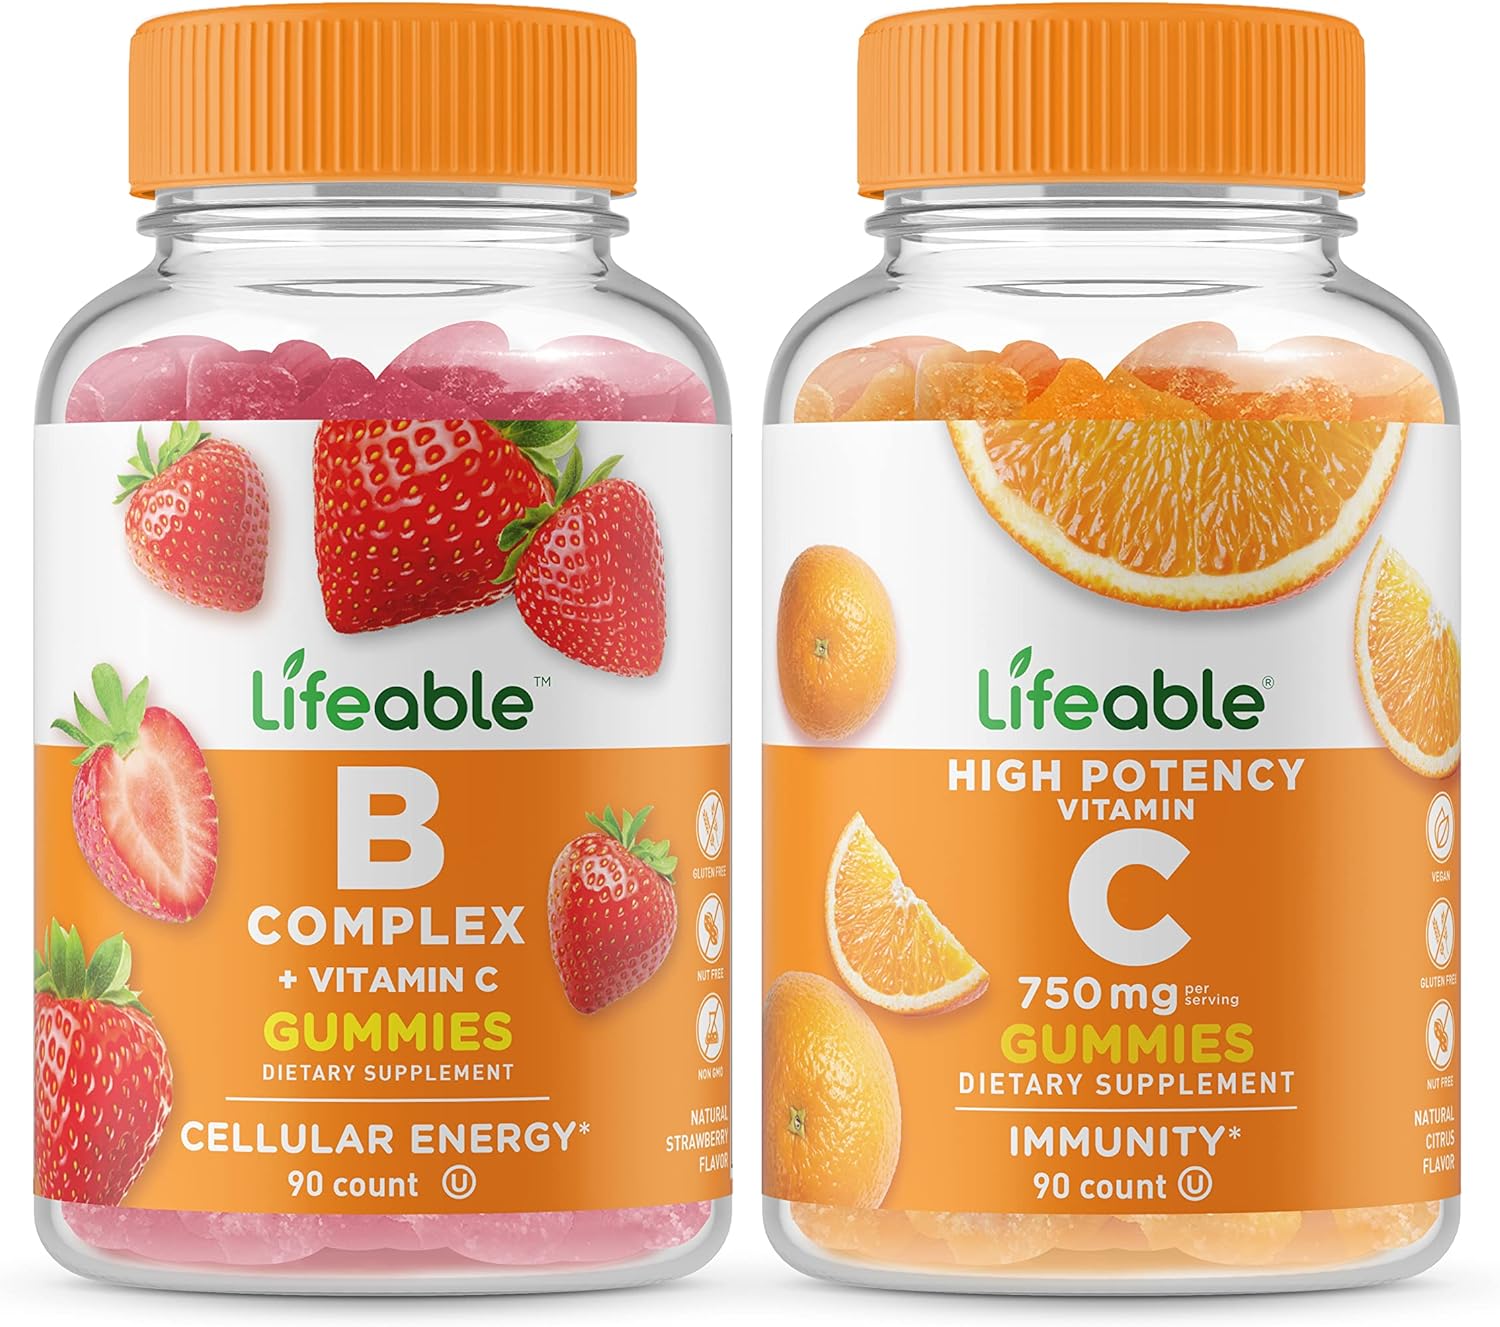 Lifeable B Complex + Vitamin C 750mg, Gummies Bundle - Great Tasting, Vitamin Supplement, Gluten Free, GMO Free, Chewable